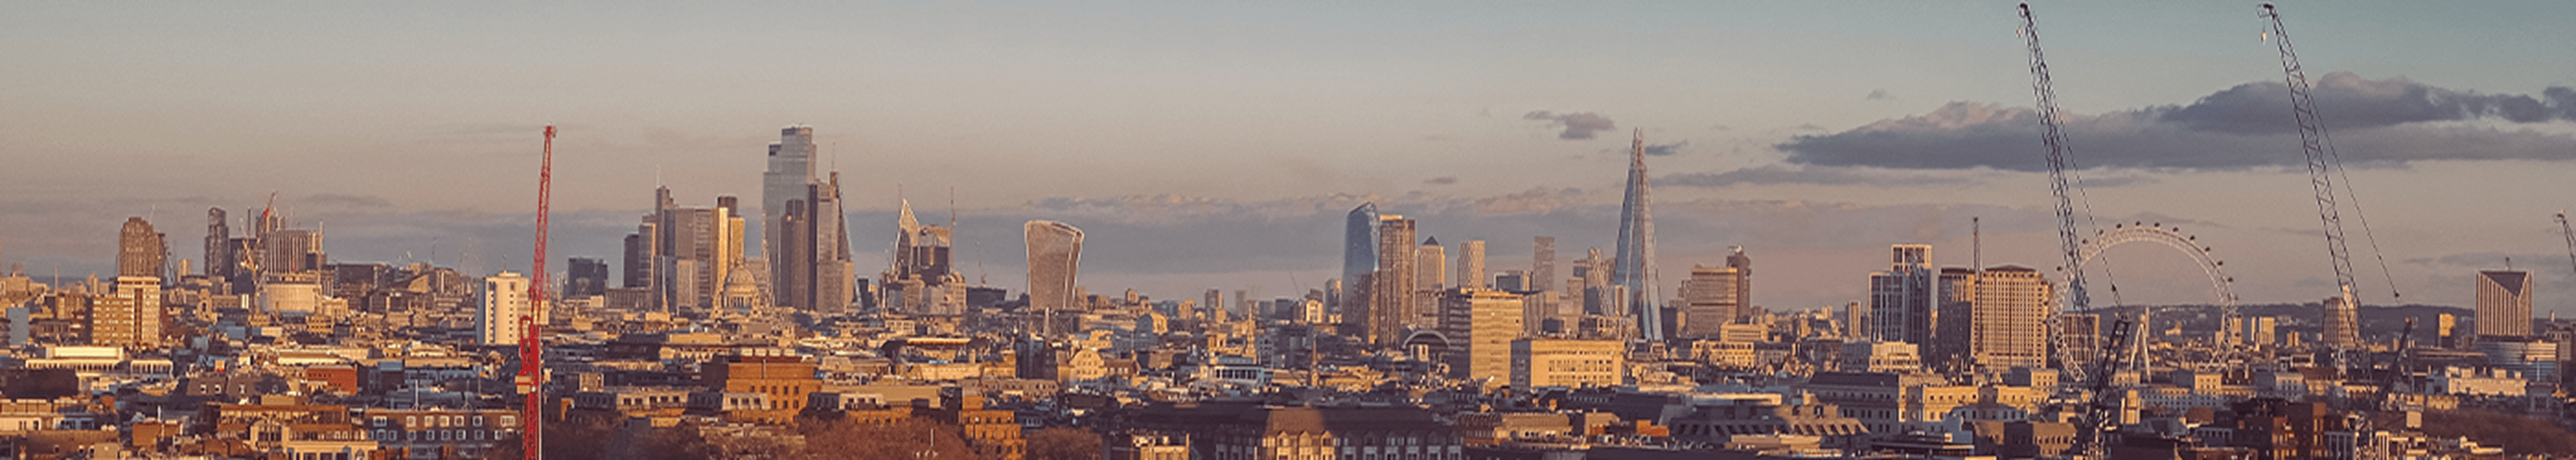 London city skyline during sunset